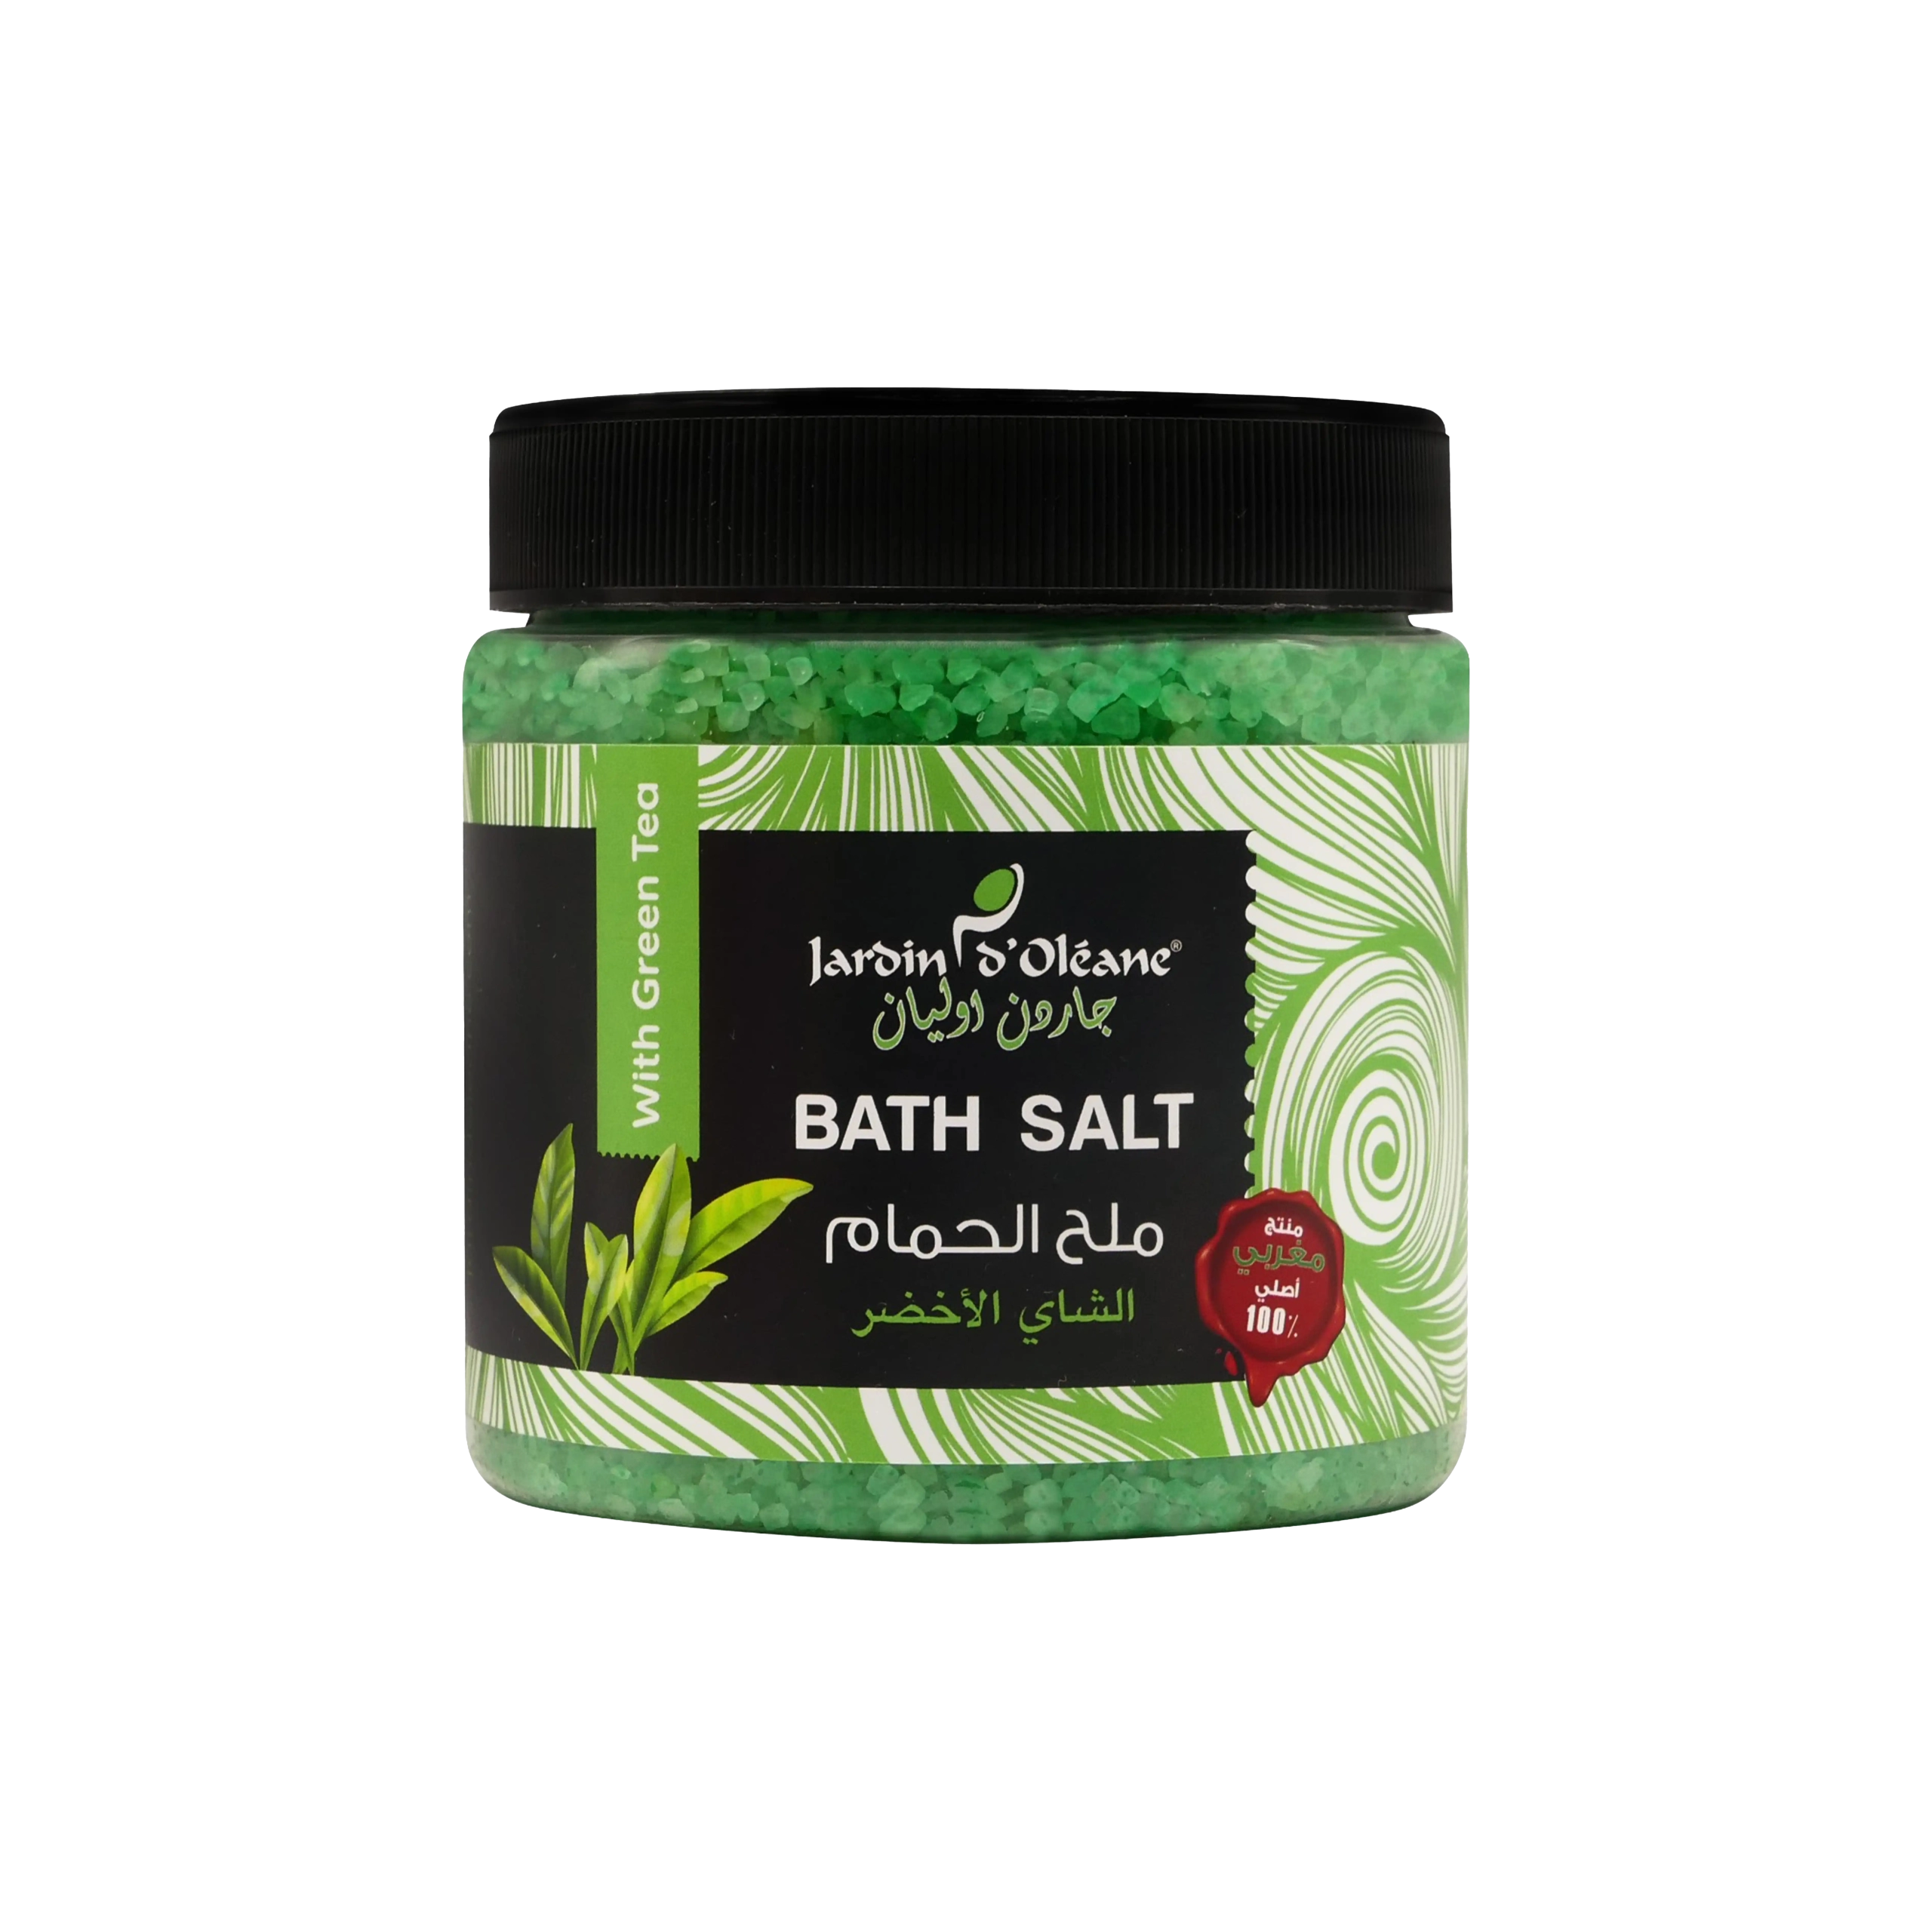 111- Jardin D’Oleane Bath Salt with Green Tea 600g